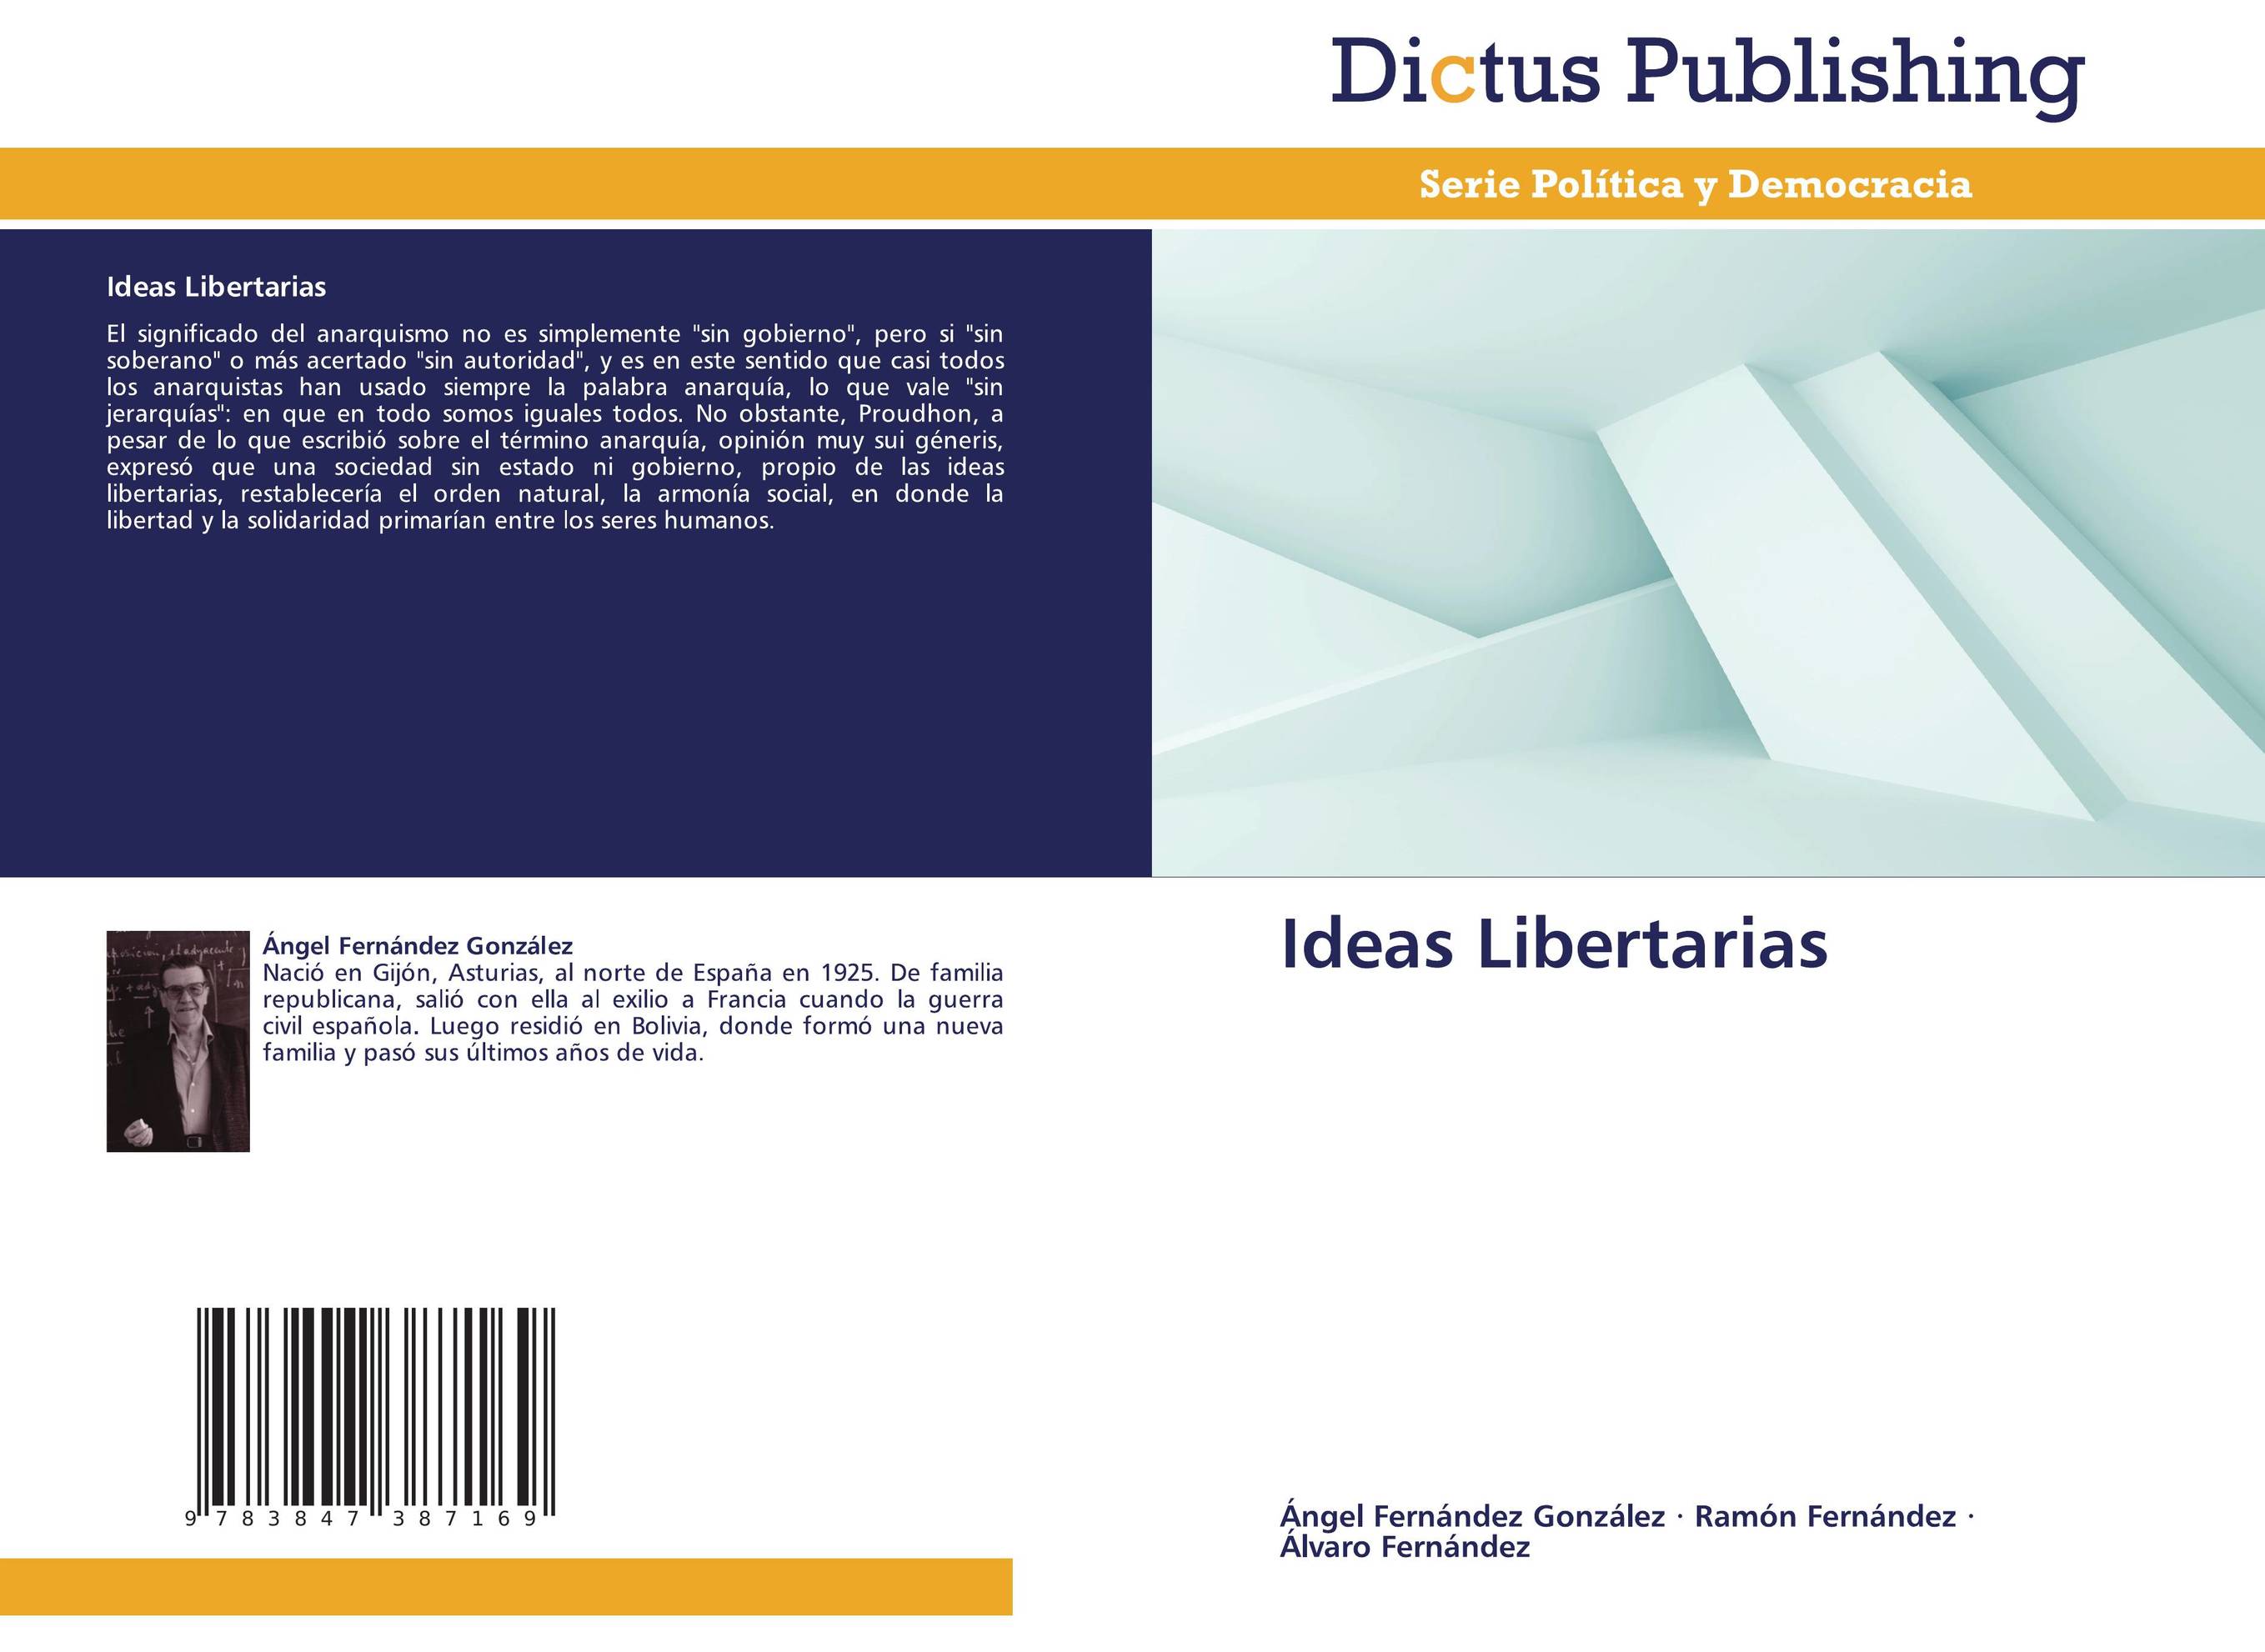 Ideas Libertarias